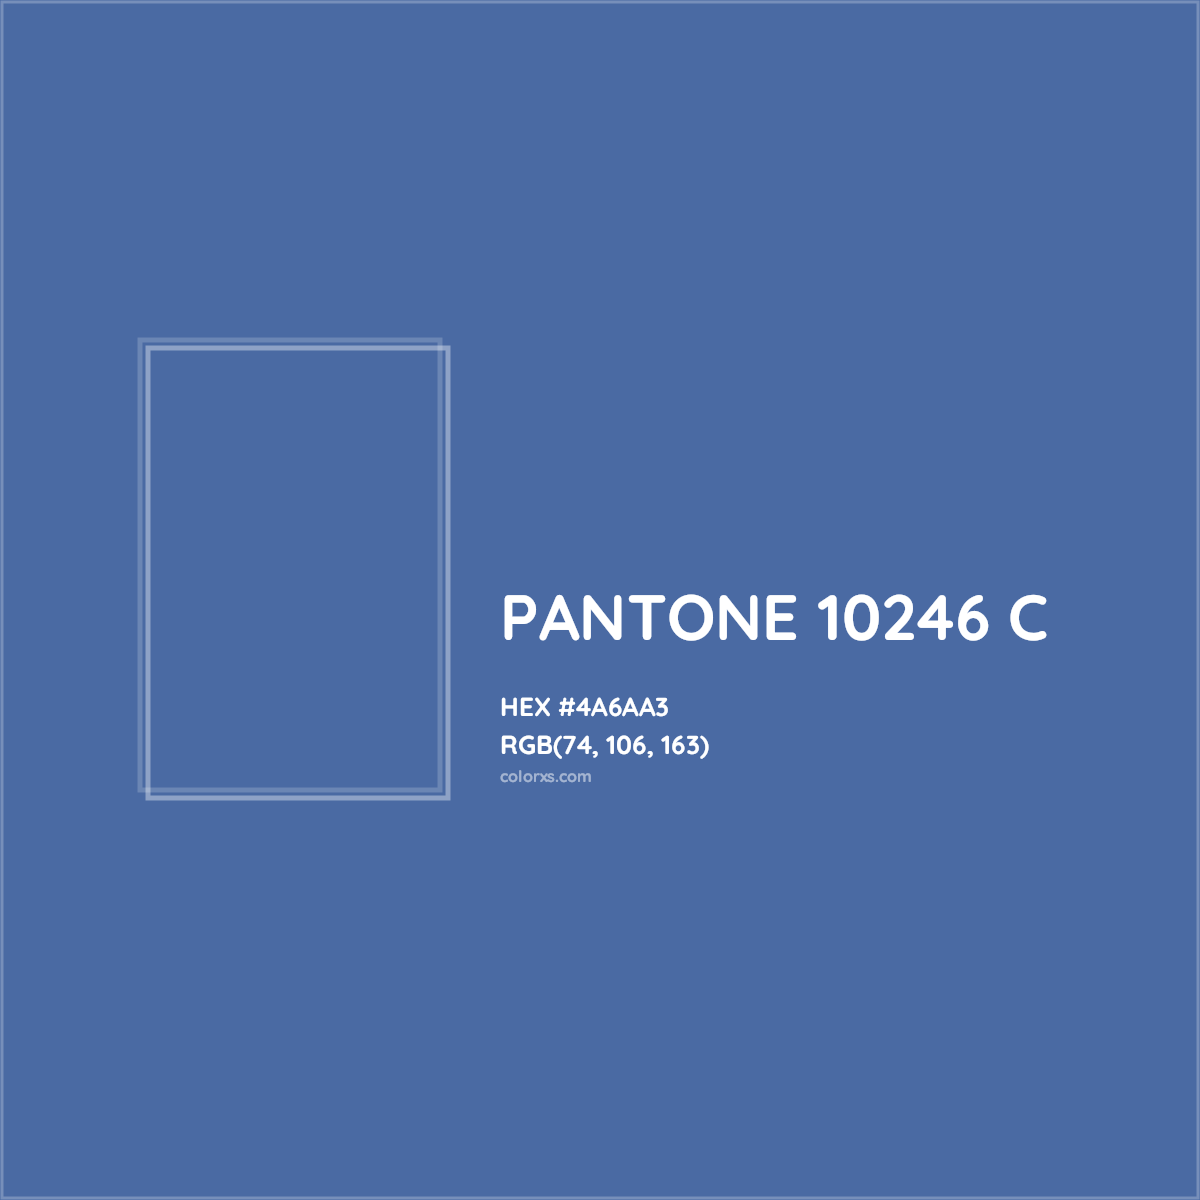 HEX #4A6AA3 PANTONE 10246 C CMS Pantone PMS - Color Code